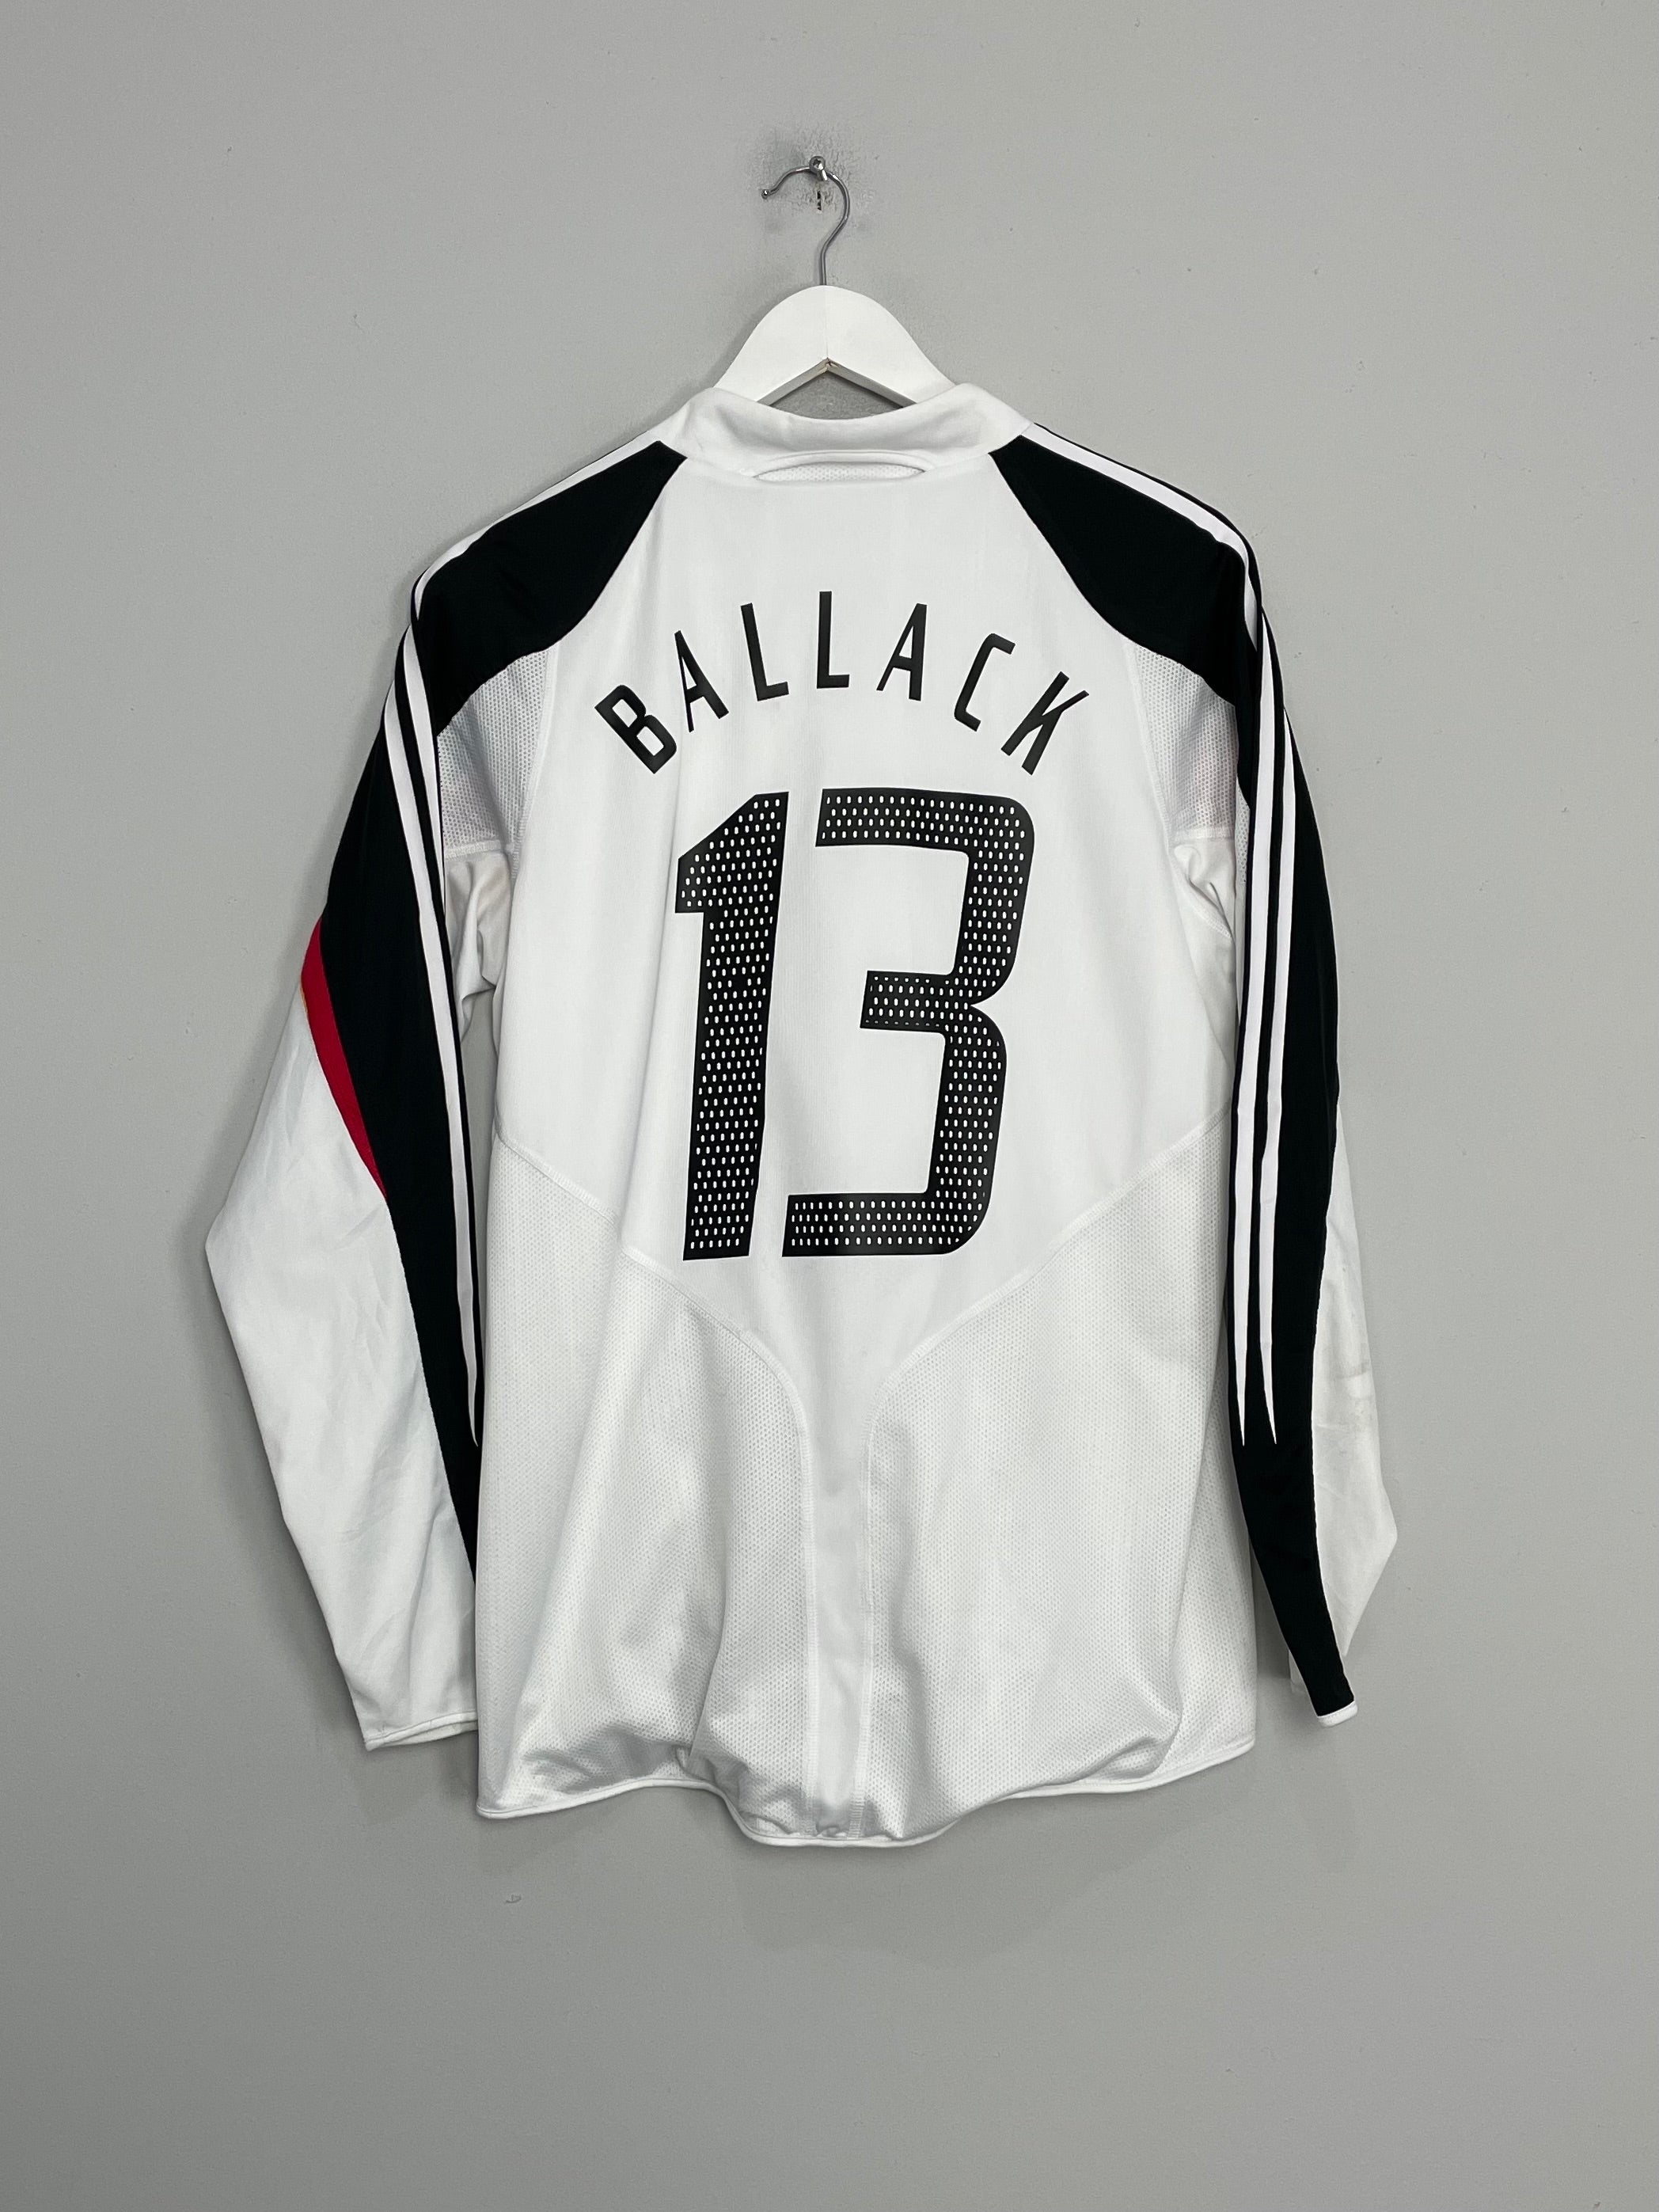 Michael Ballack's classic Germany kit